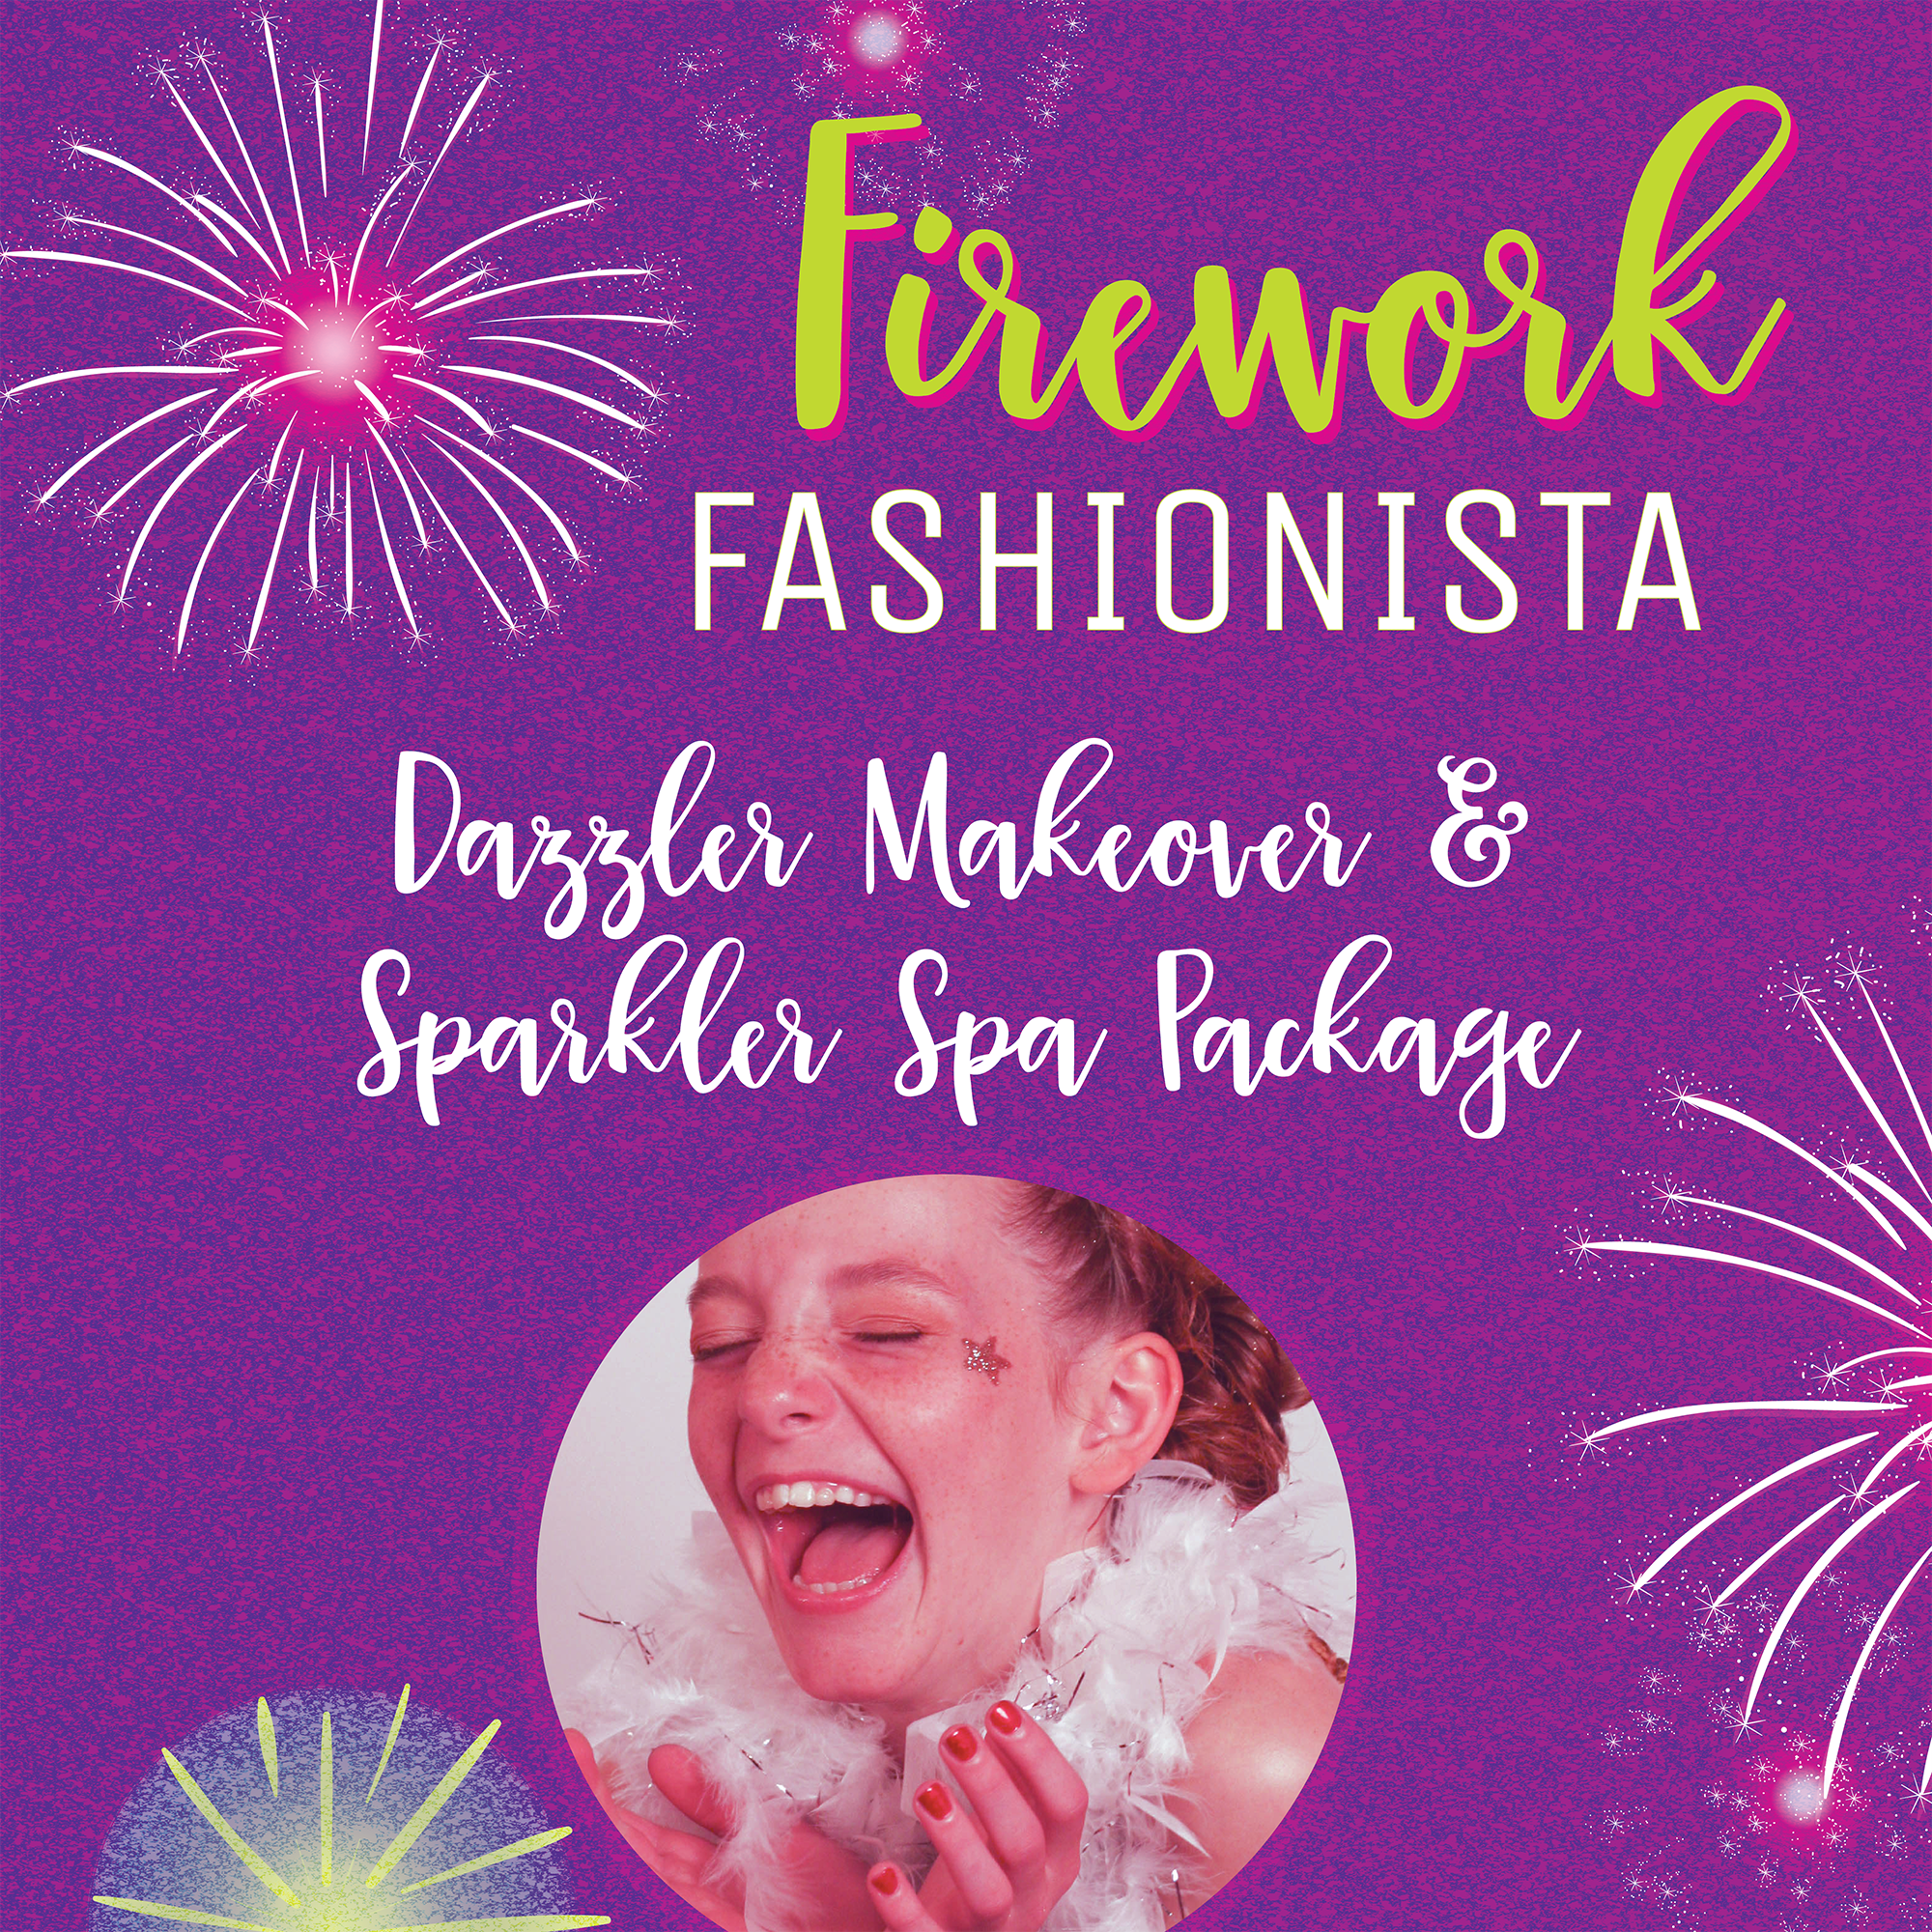 Firework fashionista promo at sweet and sassy